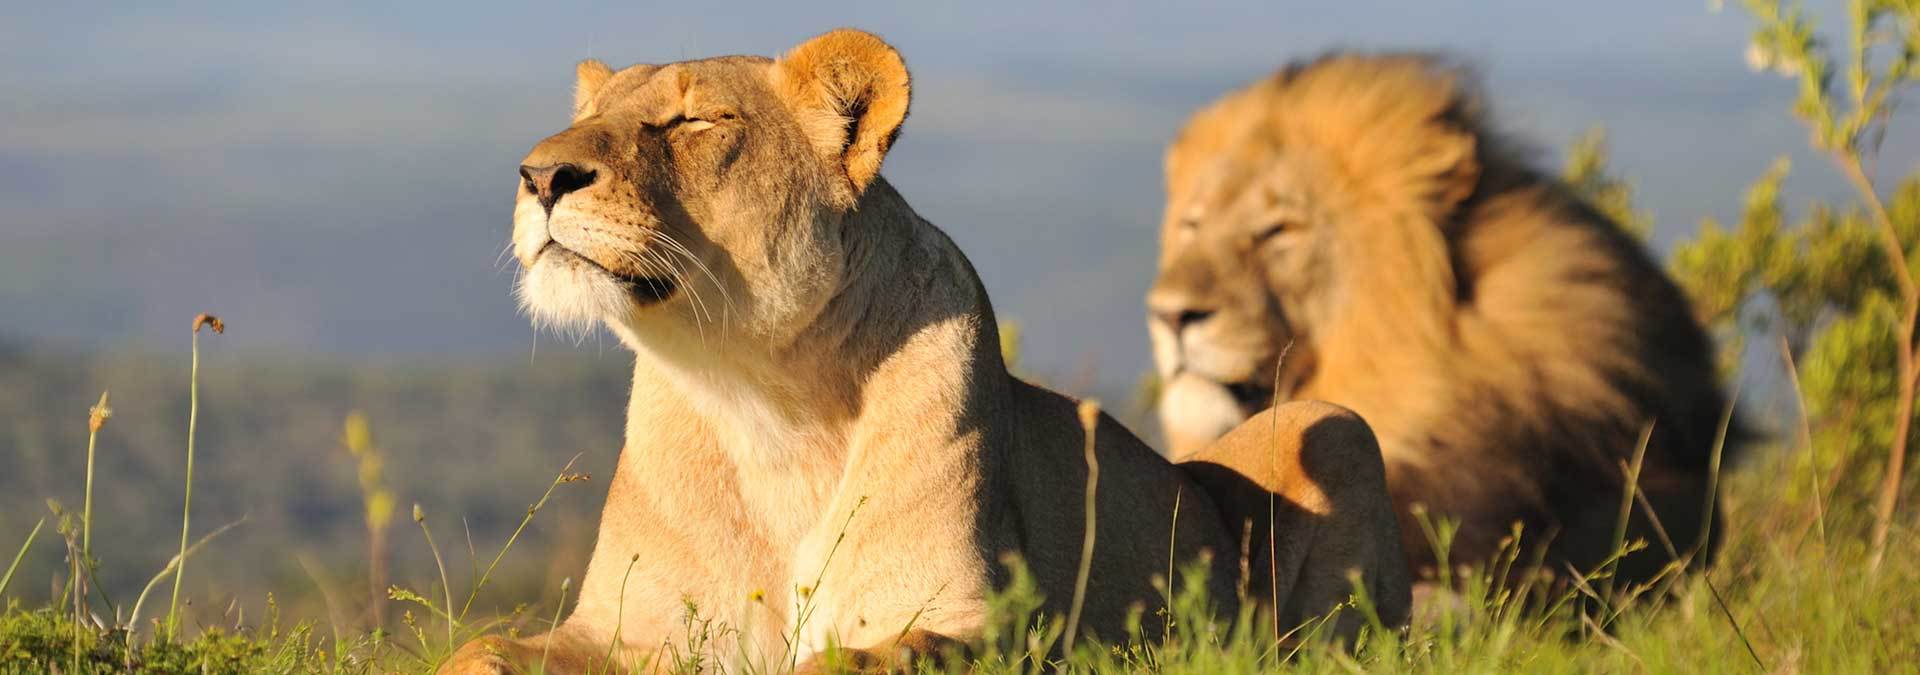 Kariega Lions Enjoying The Sun